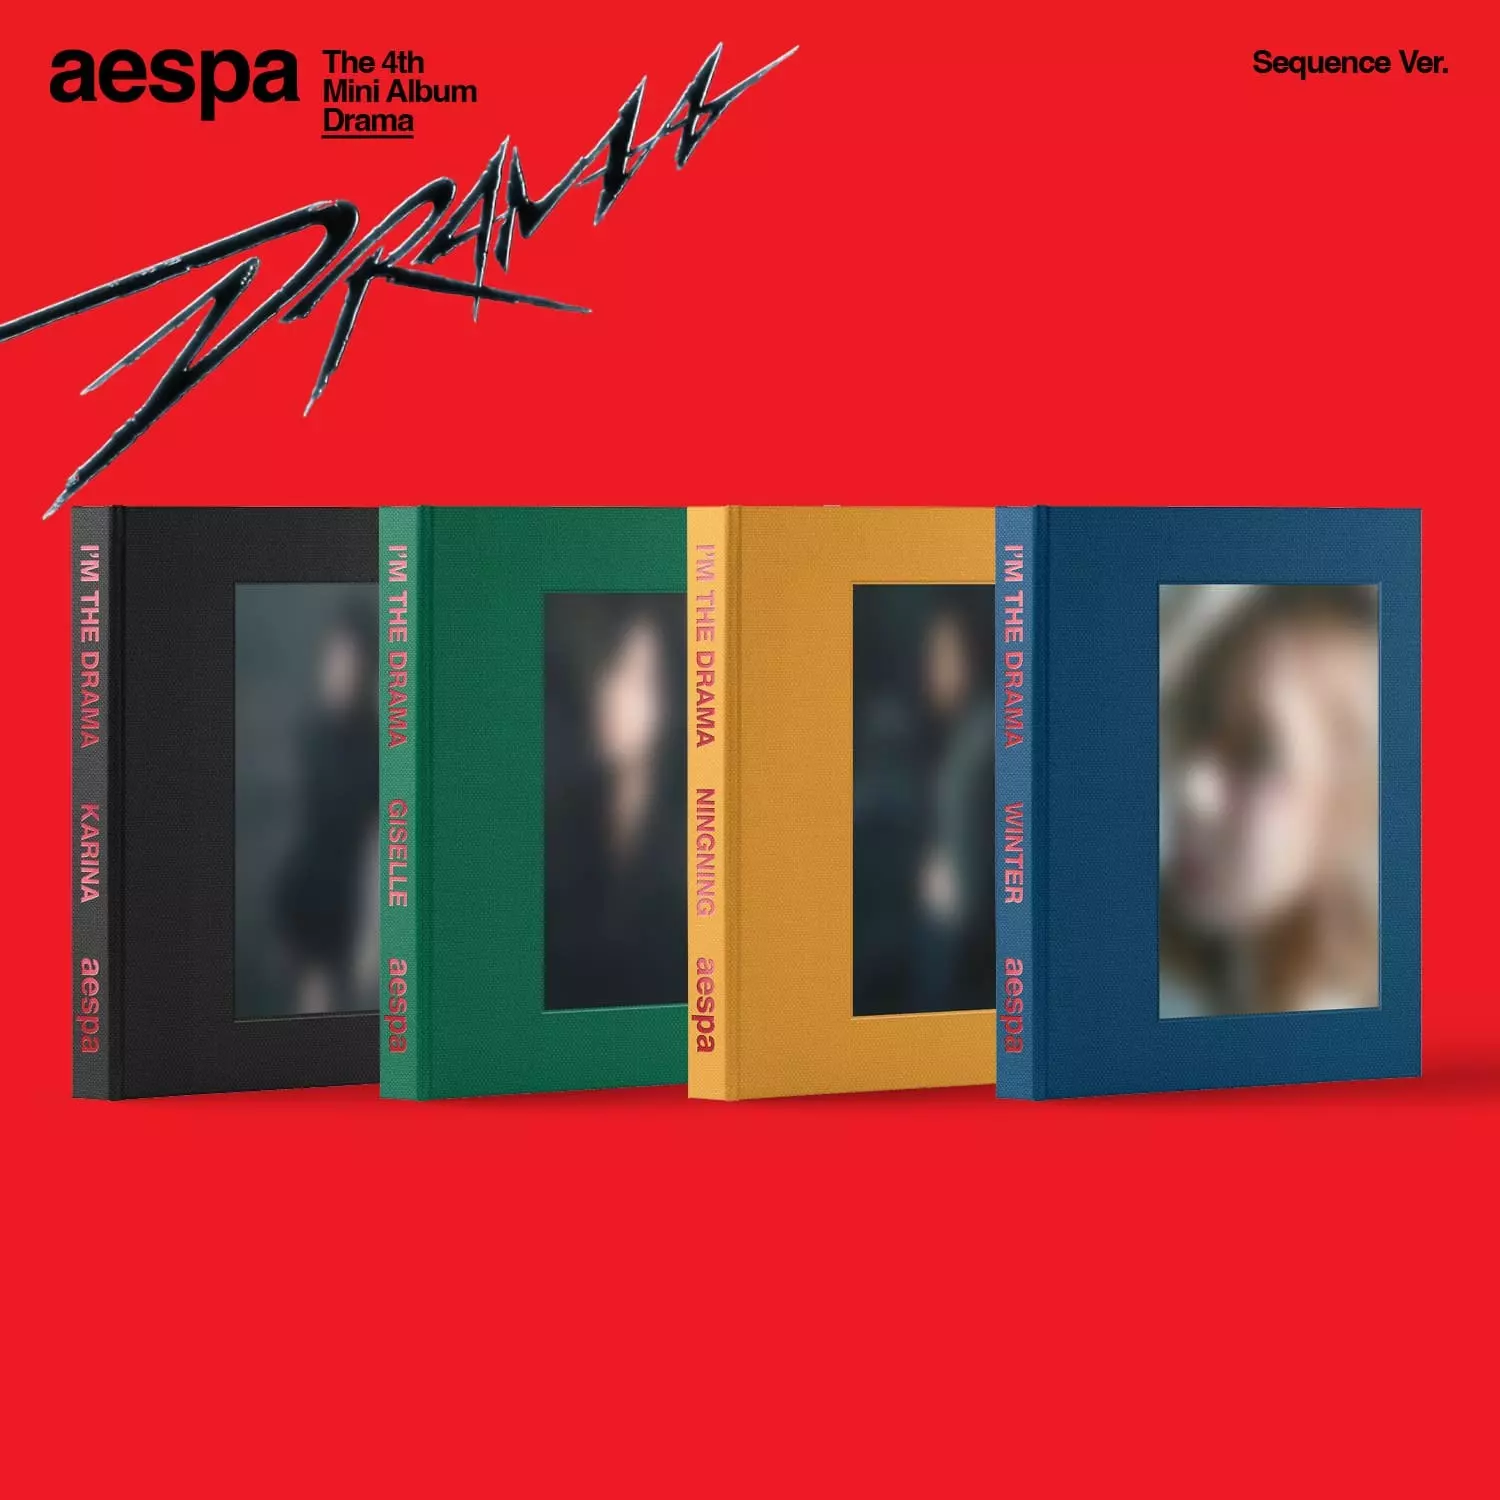 Aespa - Drama (4th Mini Album) [Sequence Ver.]